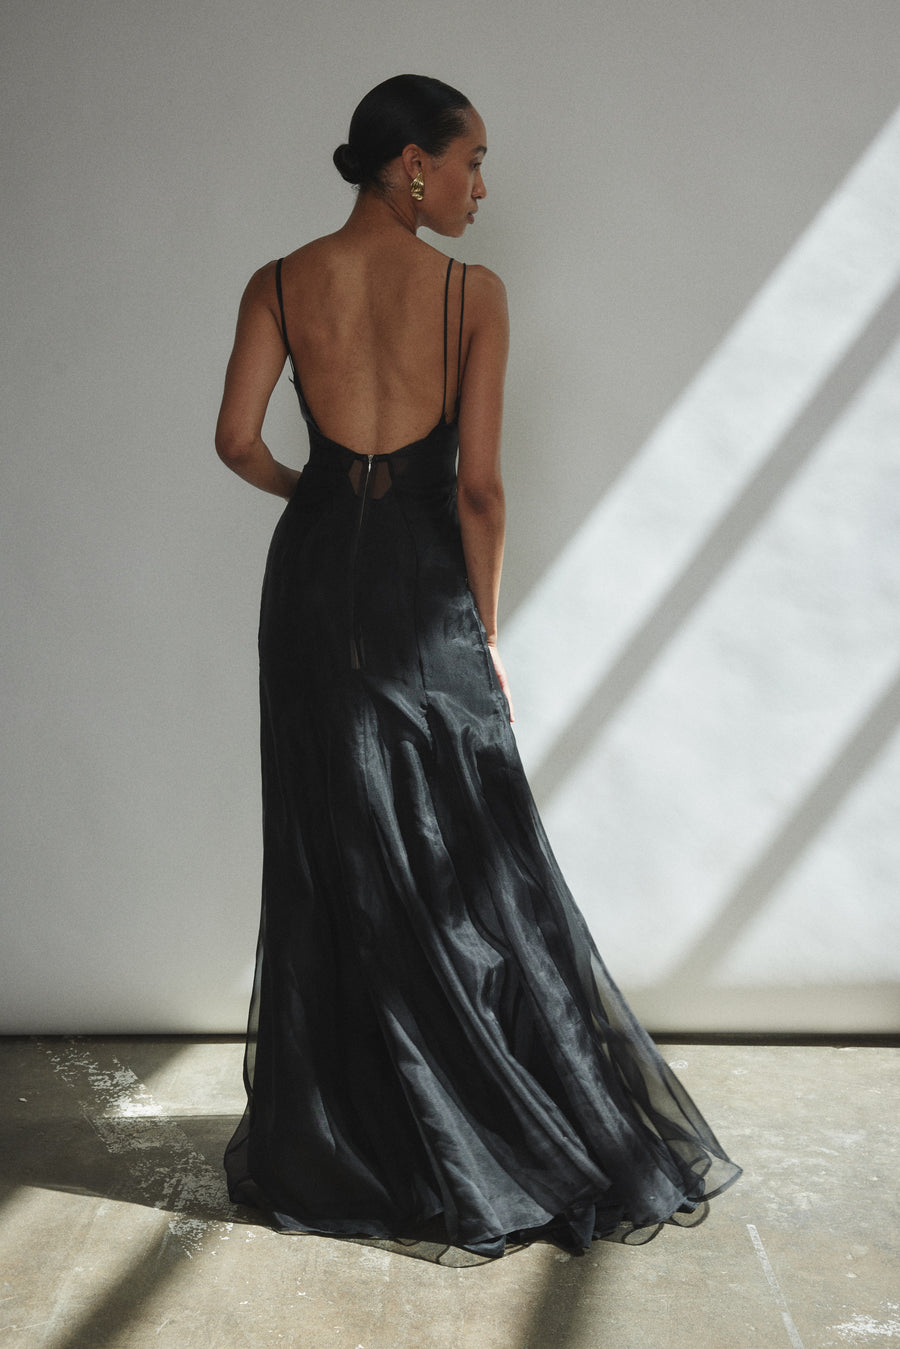 Kamperett Lalique Gown